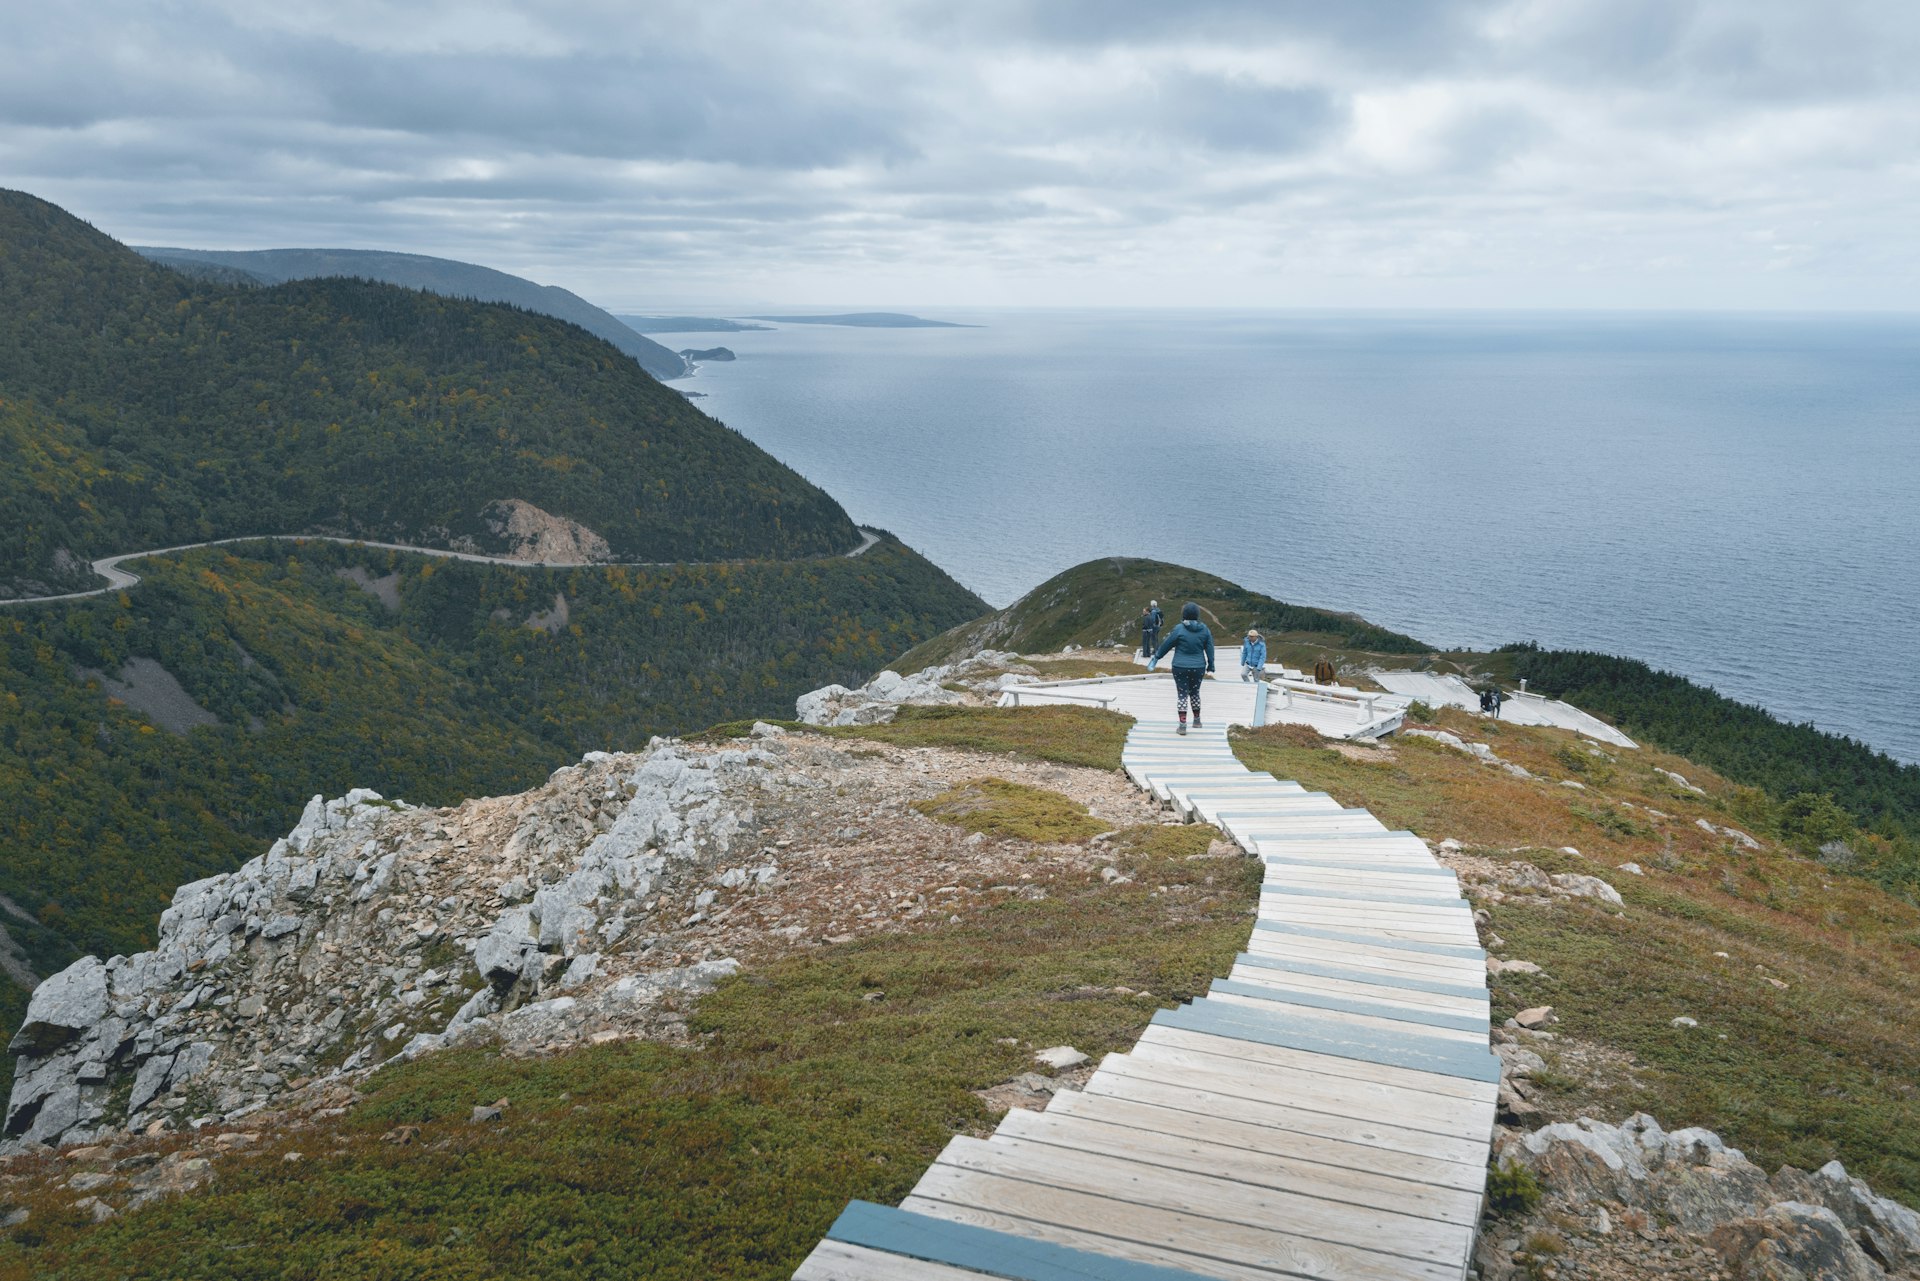 People walking on the boardwalk along the Skyline Trail, Cape Breton Highlands National Park, Nova Scotia, Canada